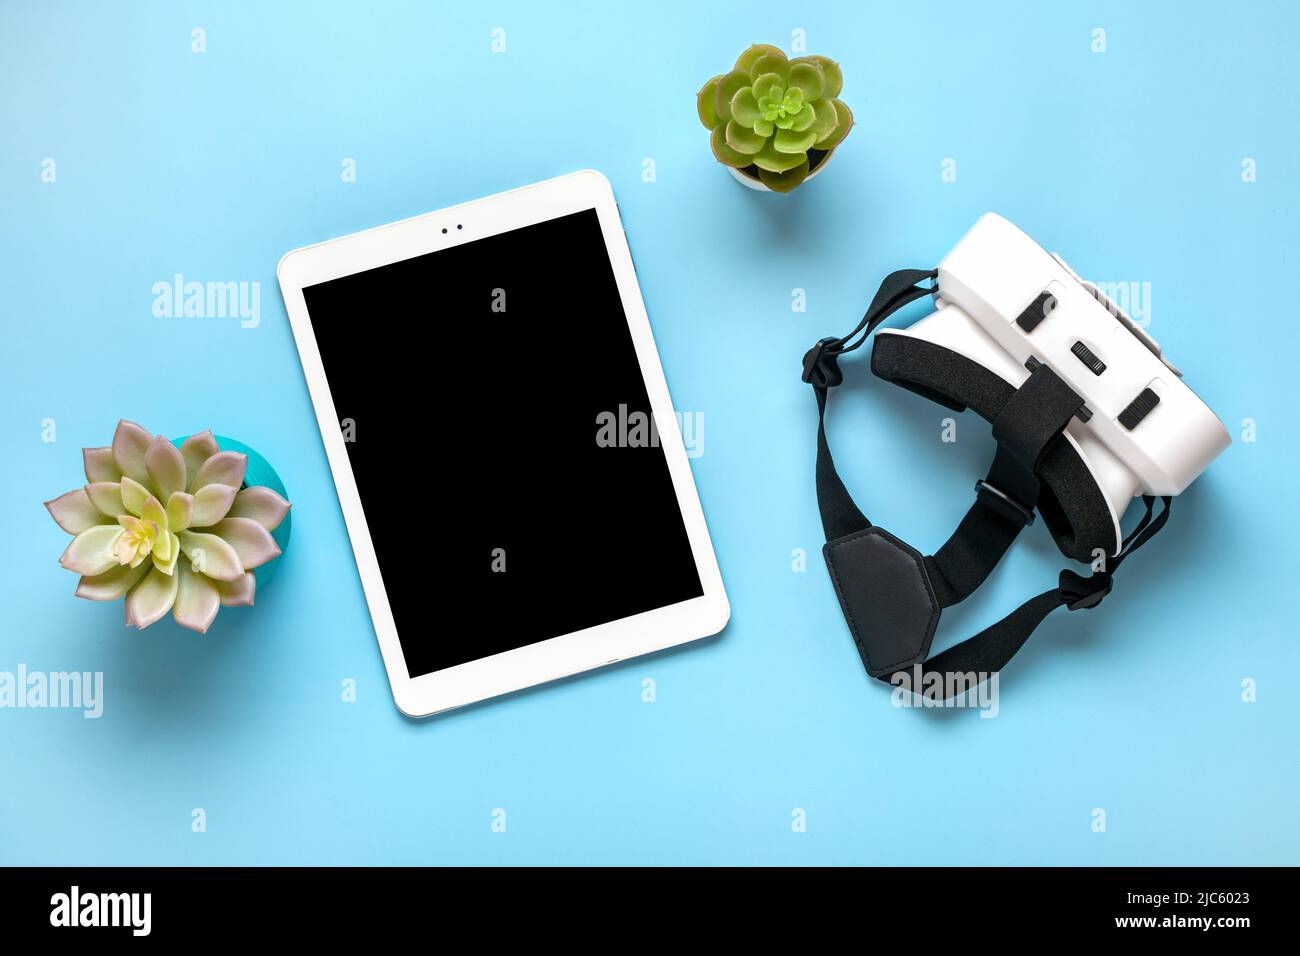 Tableta blanca con pantalla negra, gafas vr para juegos de realidad virtual  sobre fondo azul Vista superior Flat Lay Mock up Technology Concept Copy  space Fotografía de stock - Alamy